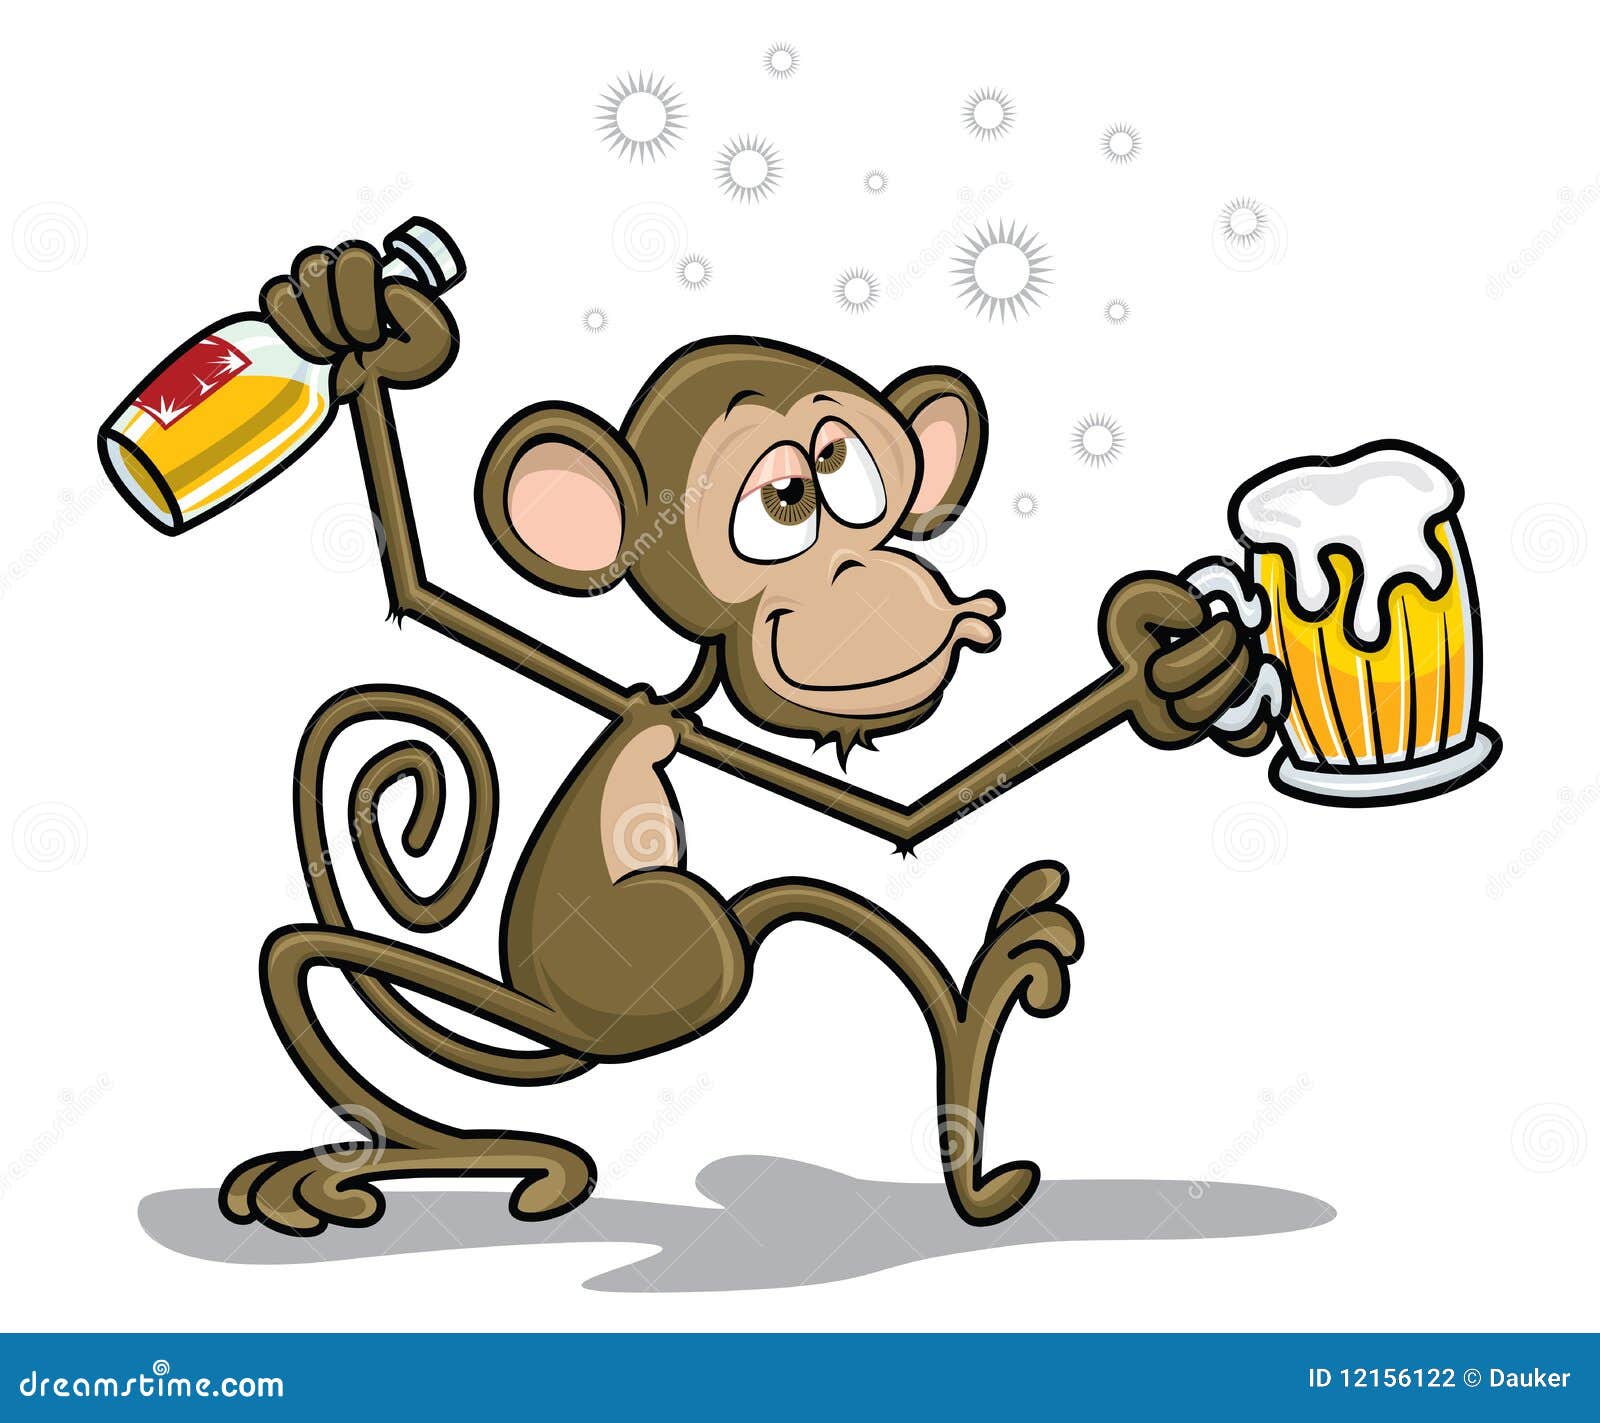 drunk monkey